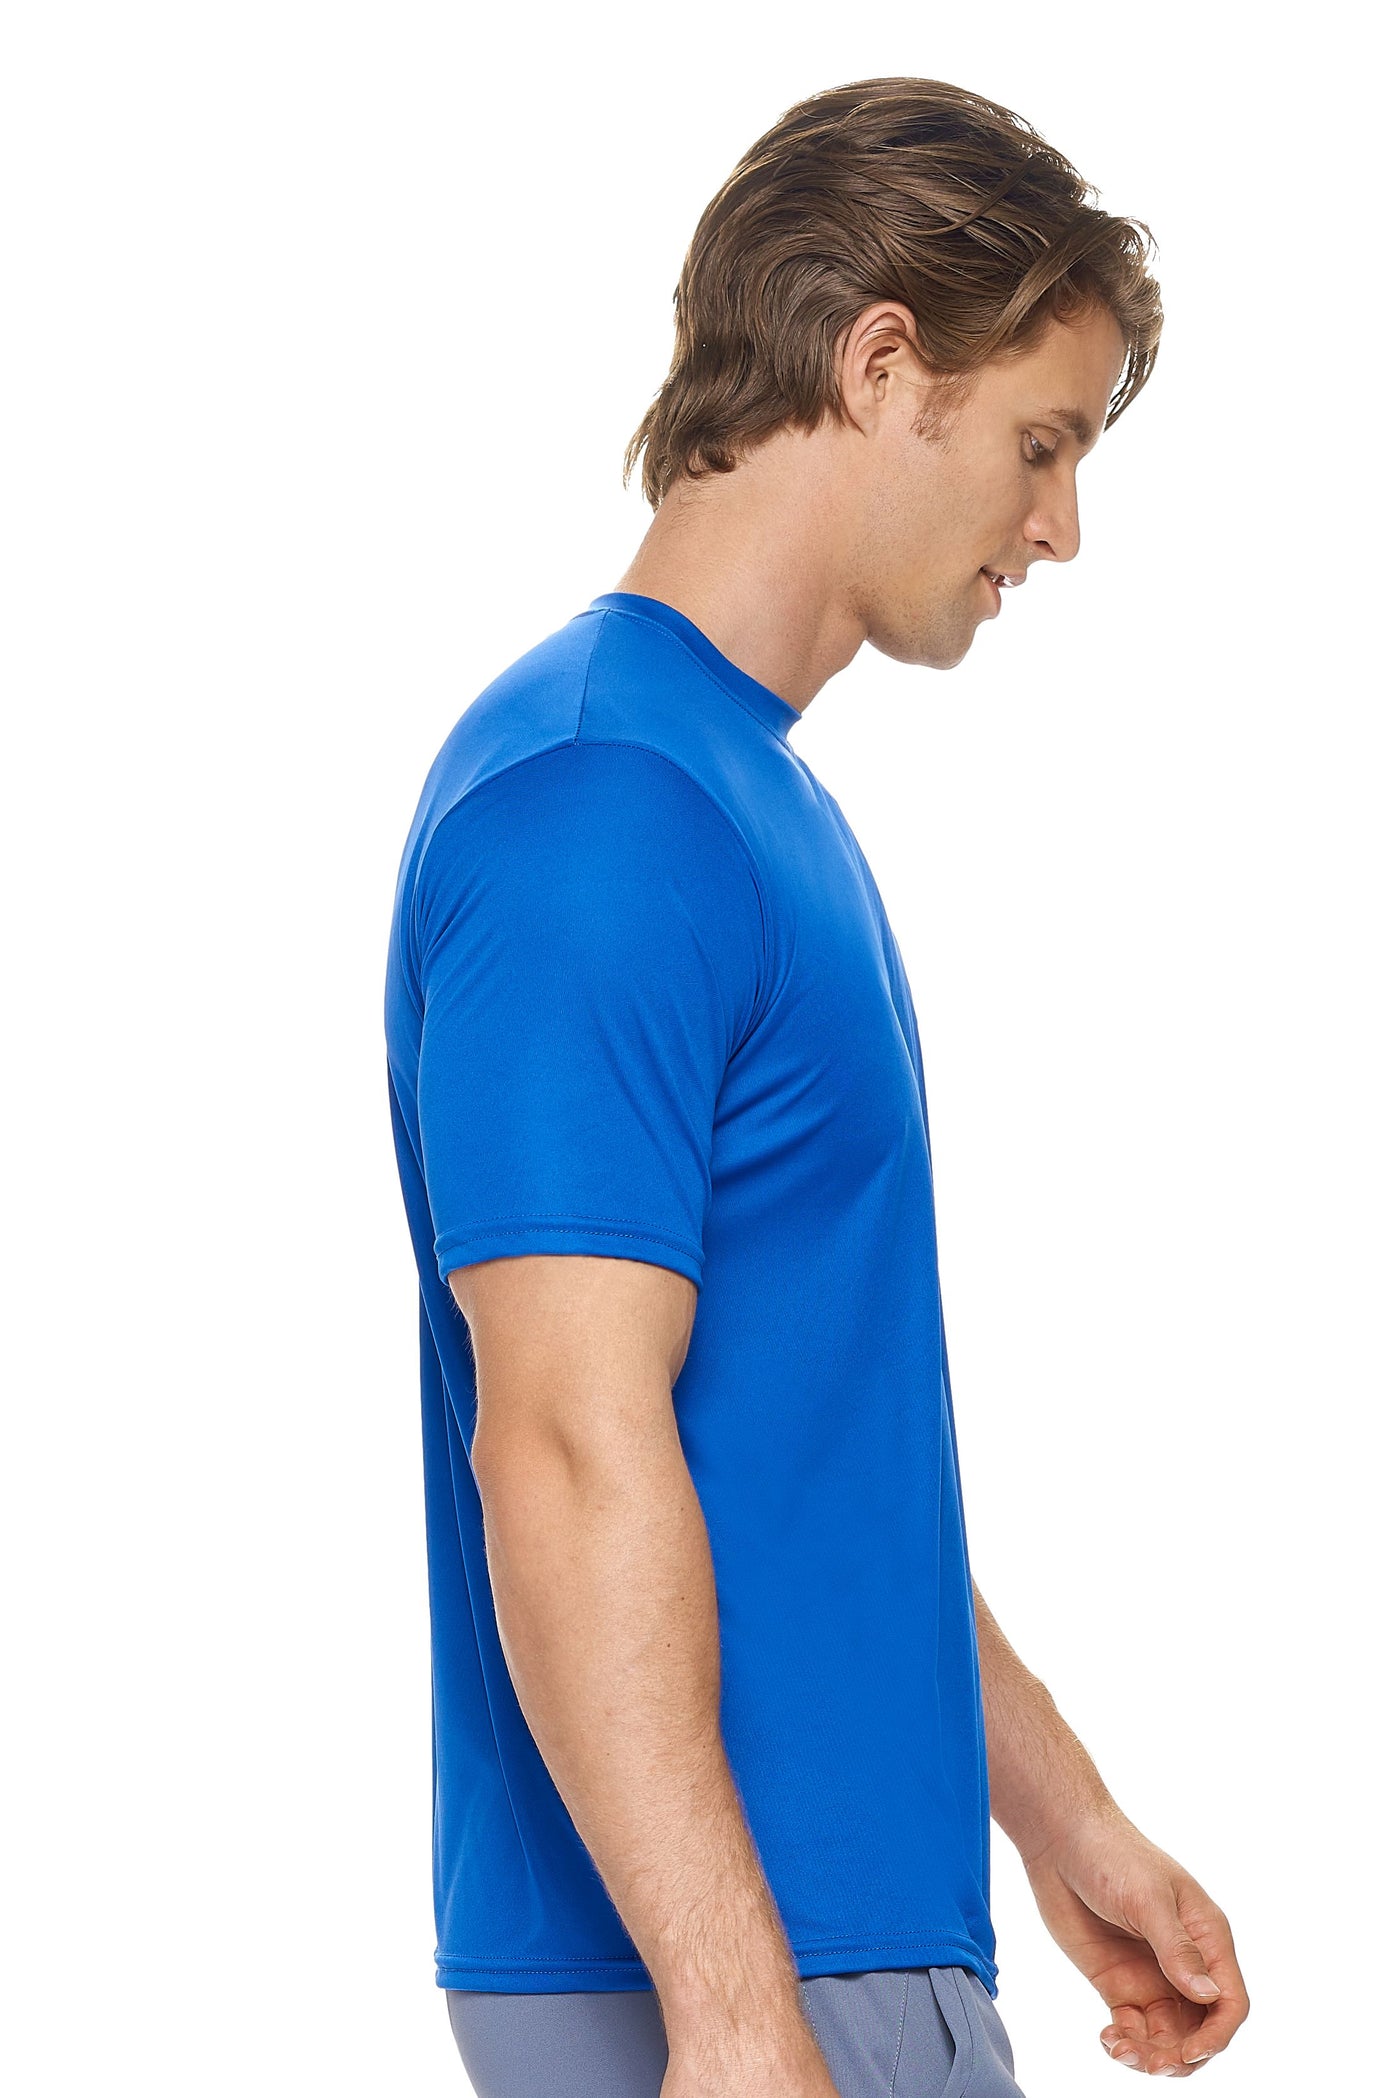 Expert Brand Retail Made in USA Men's Sportswear Activewear Running Long Sleeve Shirt Pk Max royal blue 2#color_royal-blue